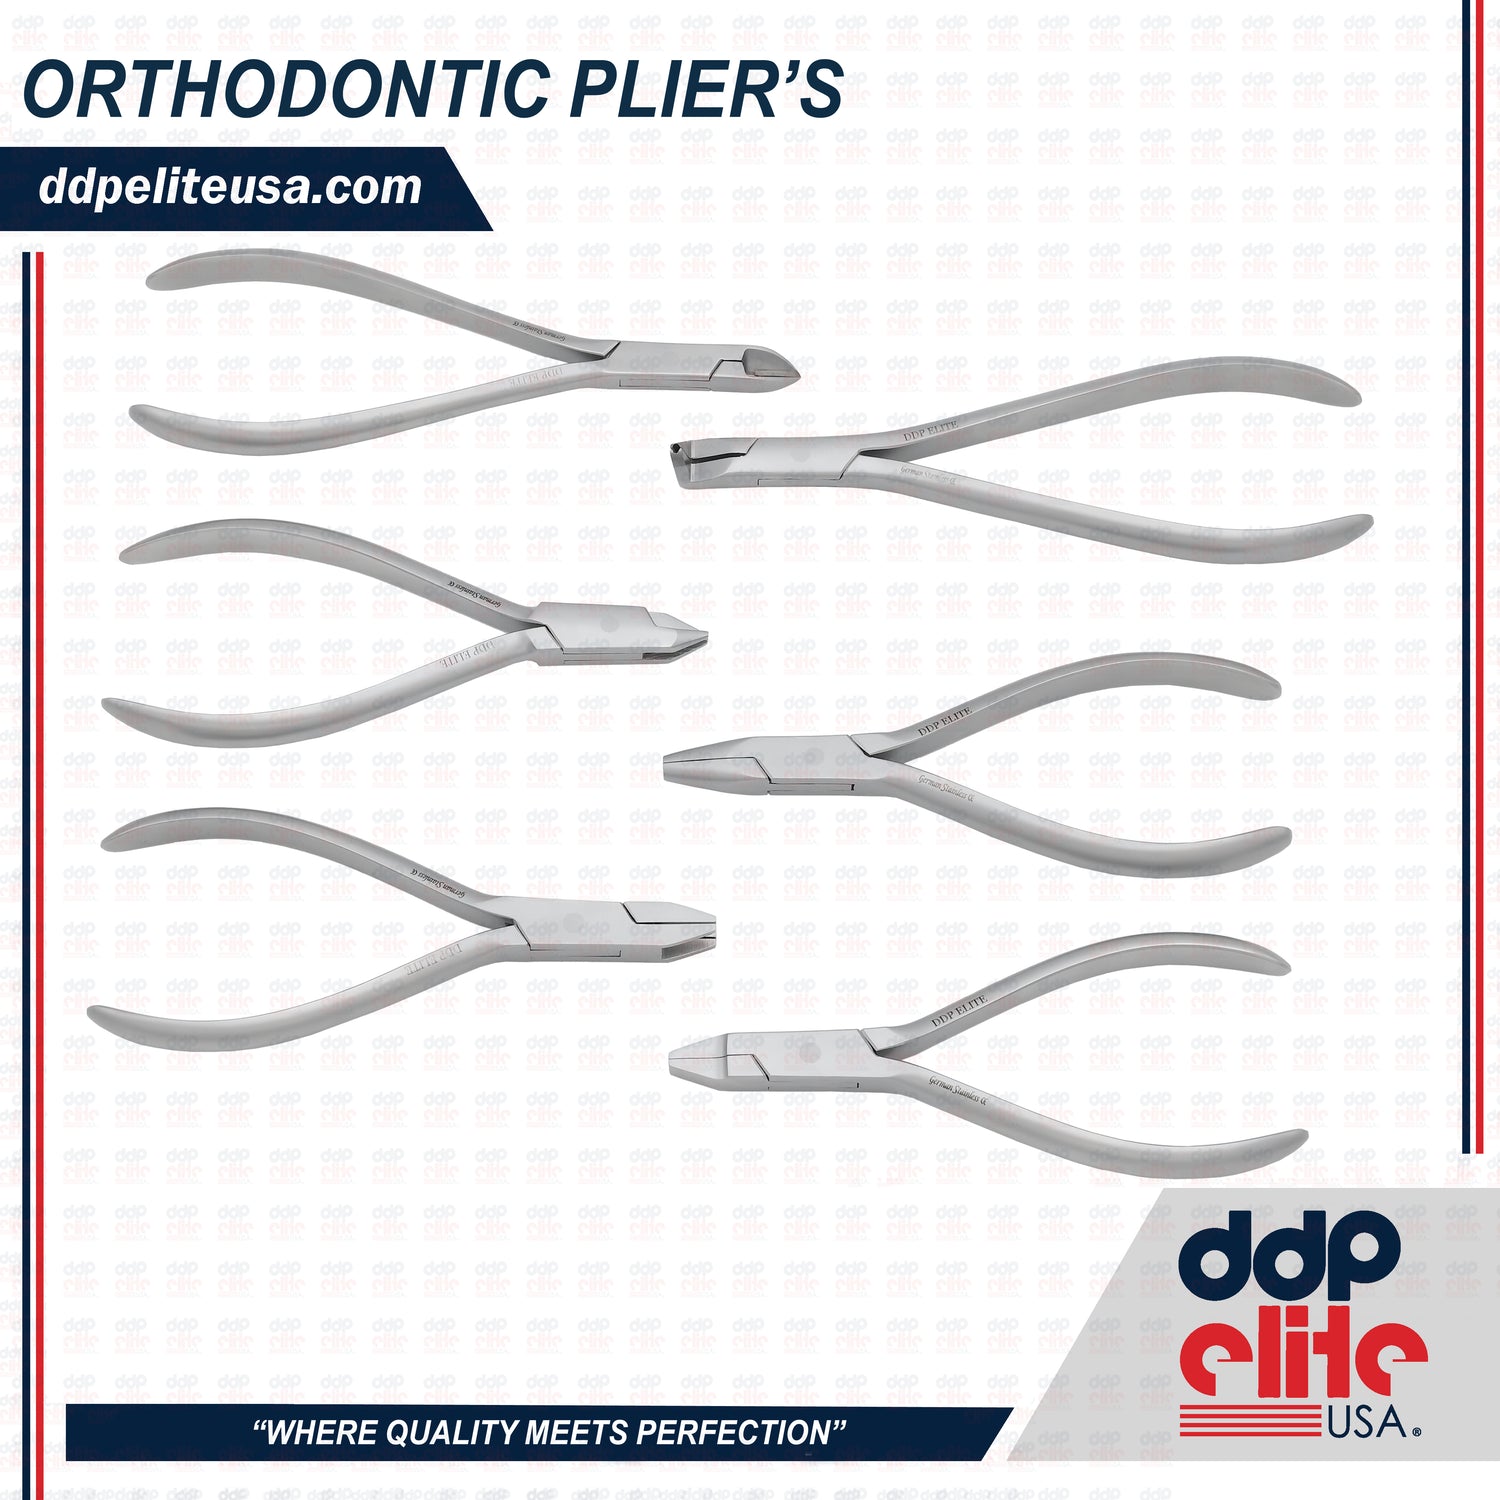 Orhtodontic Pliers